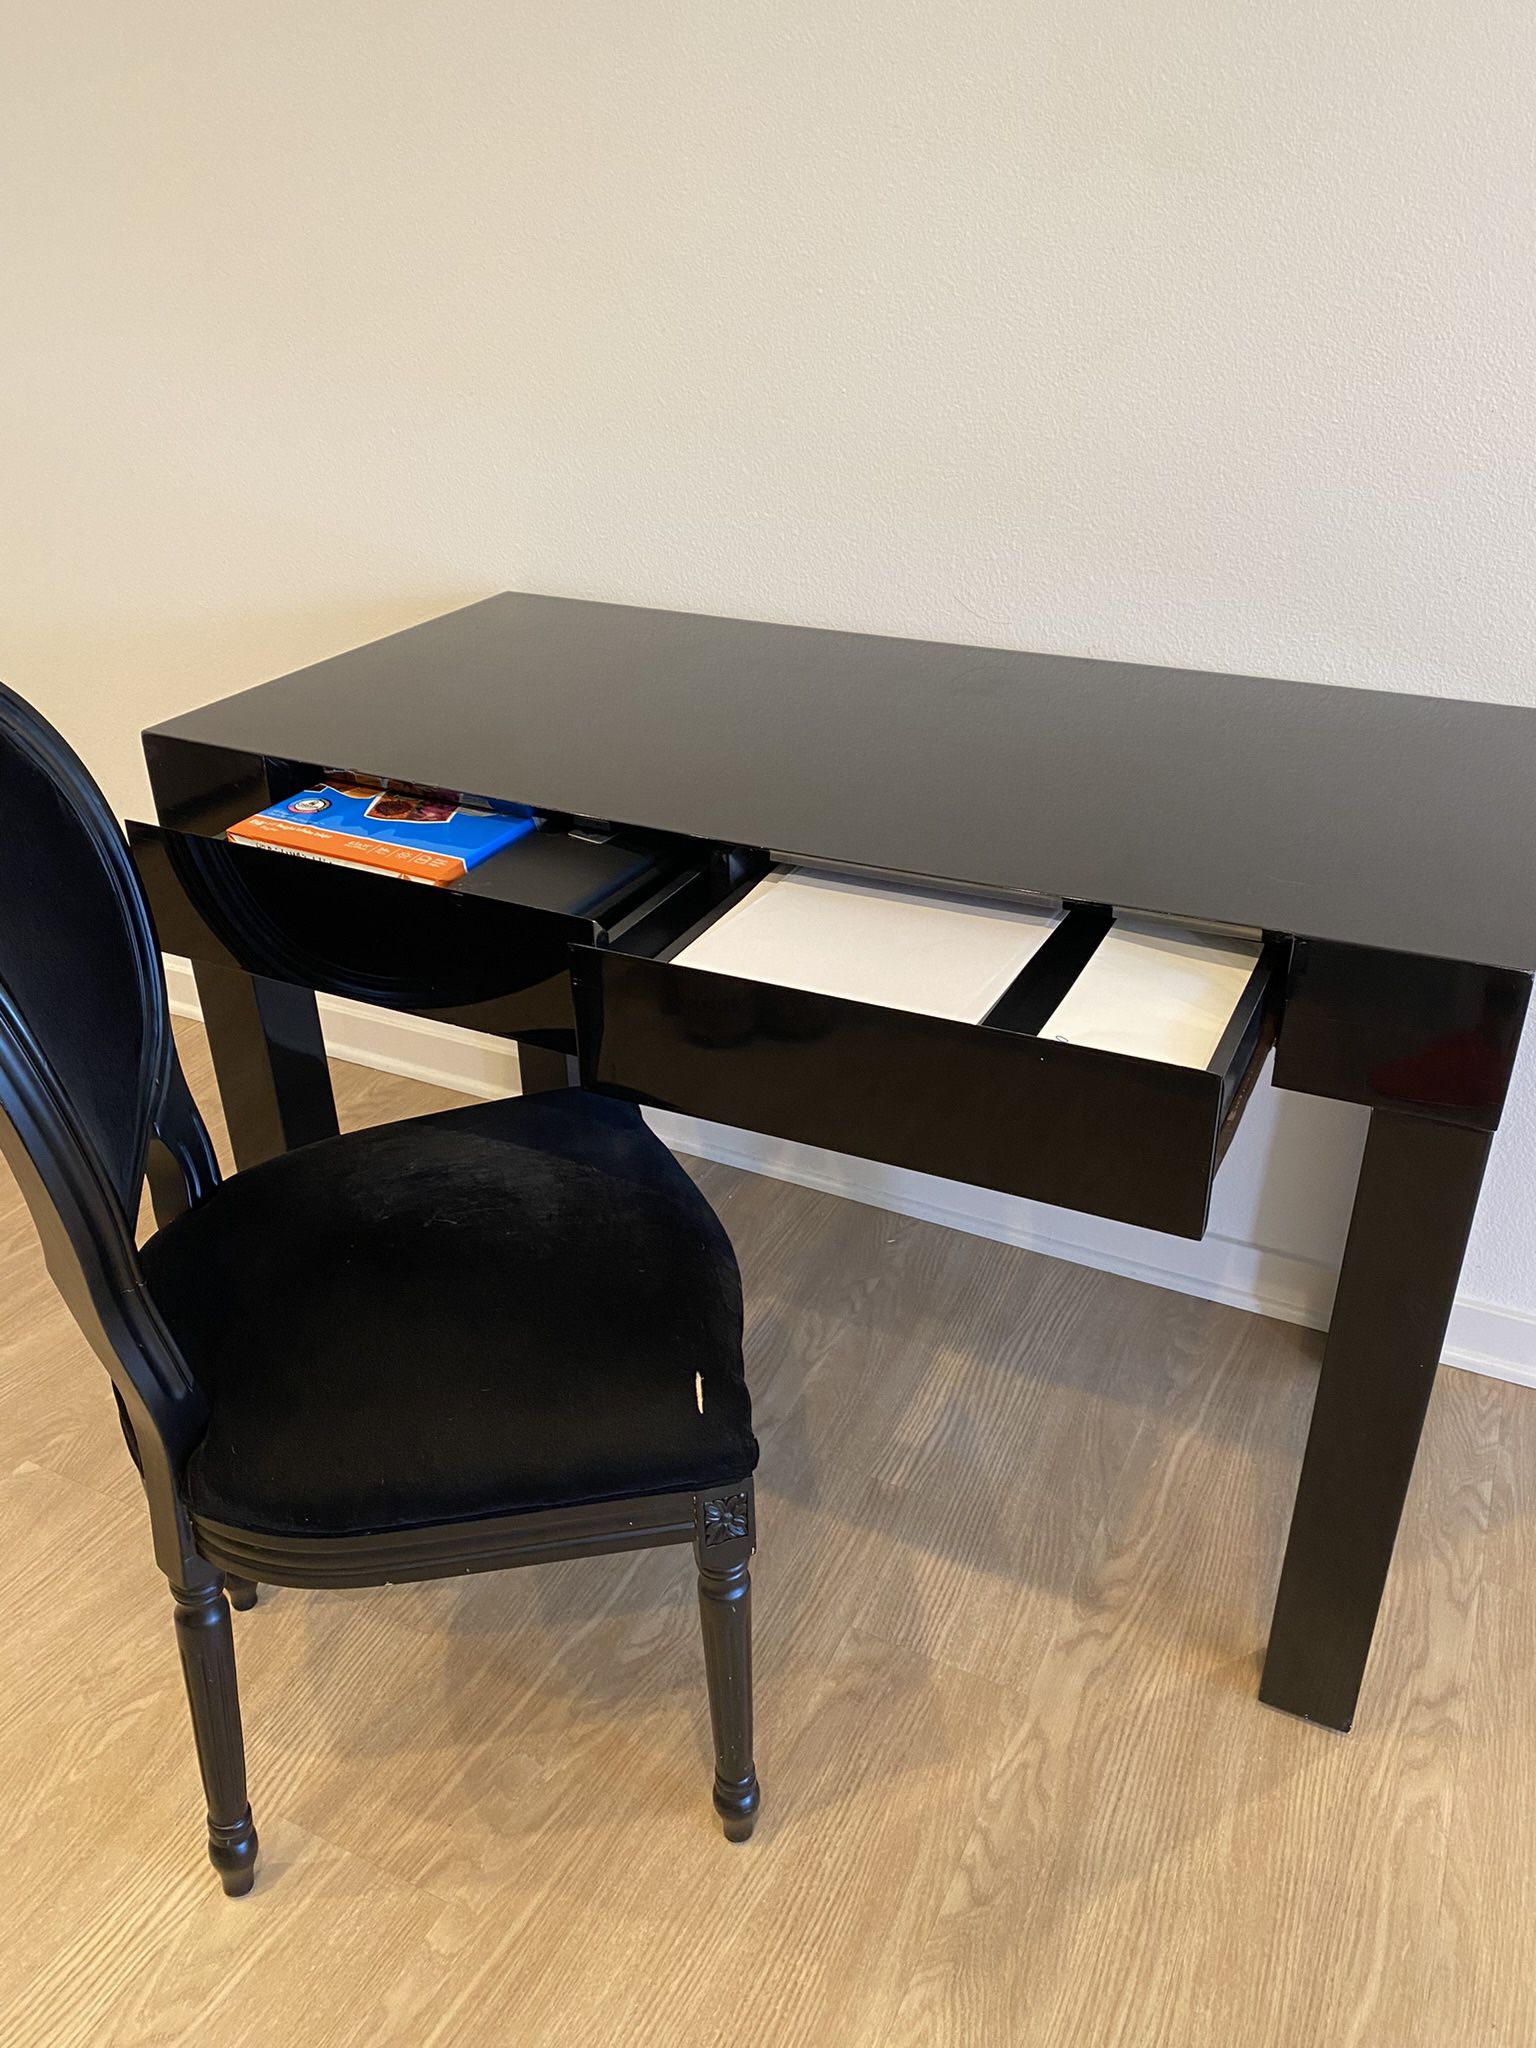 Designer desk And chair 